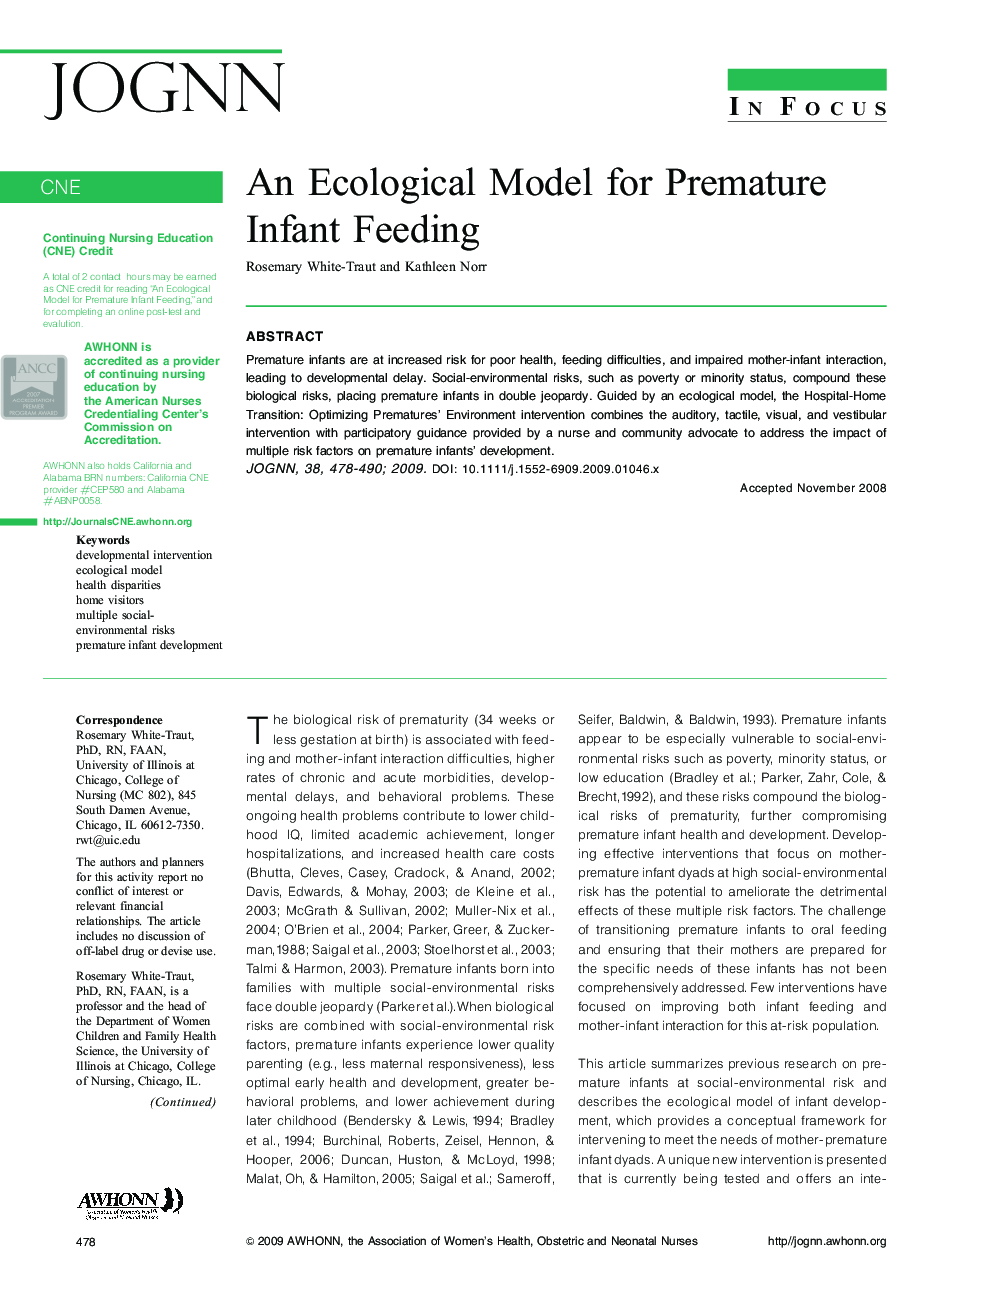 An Ecological Model for Premature Infant Feeding